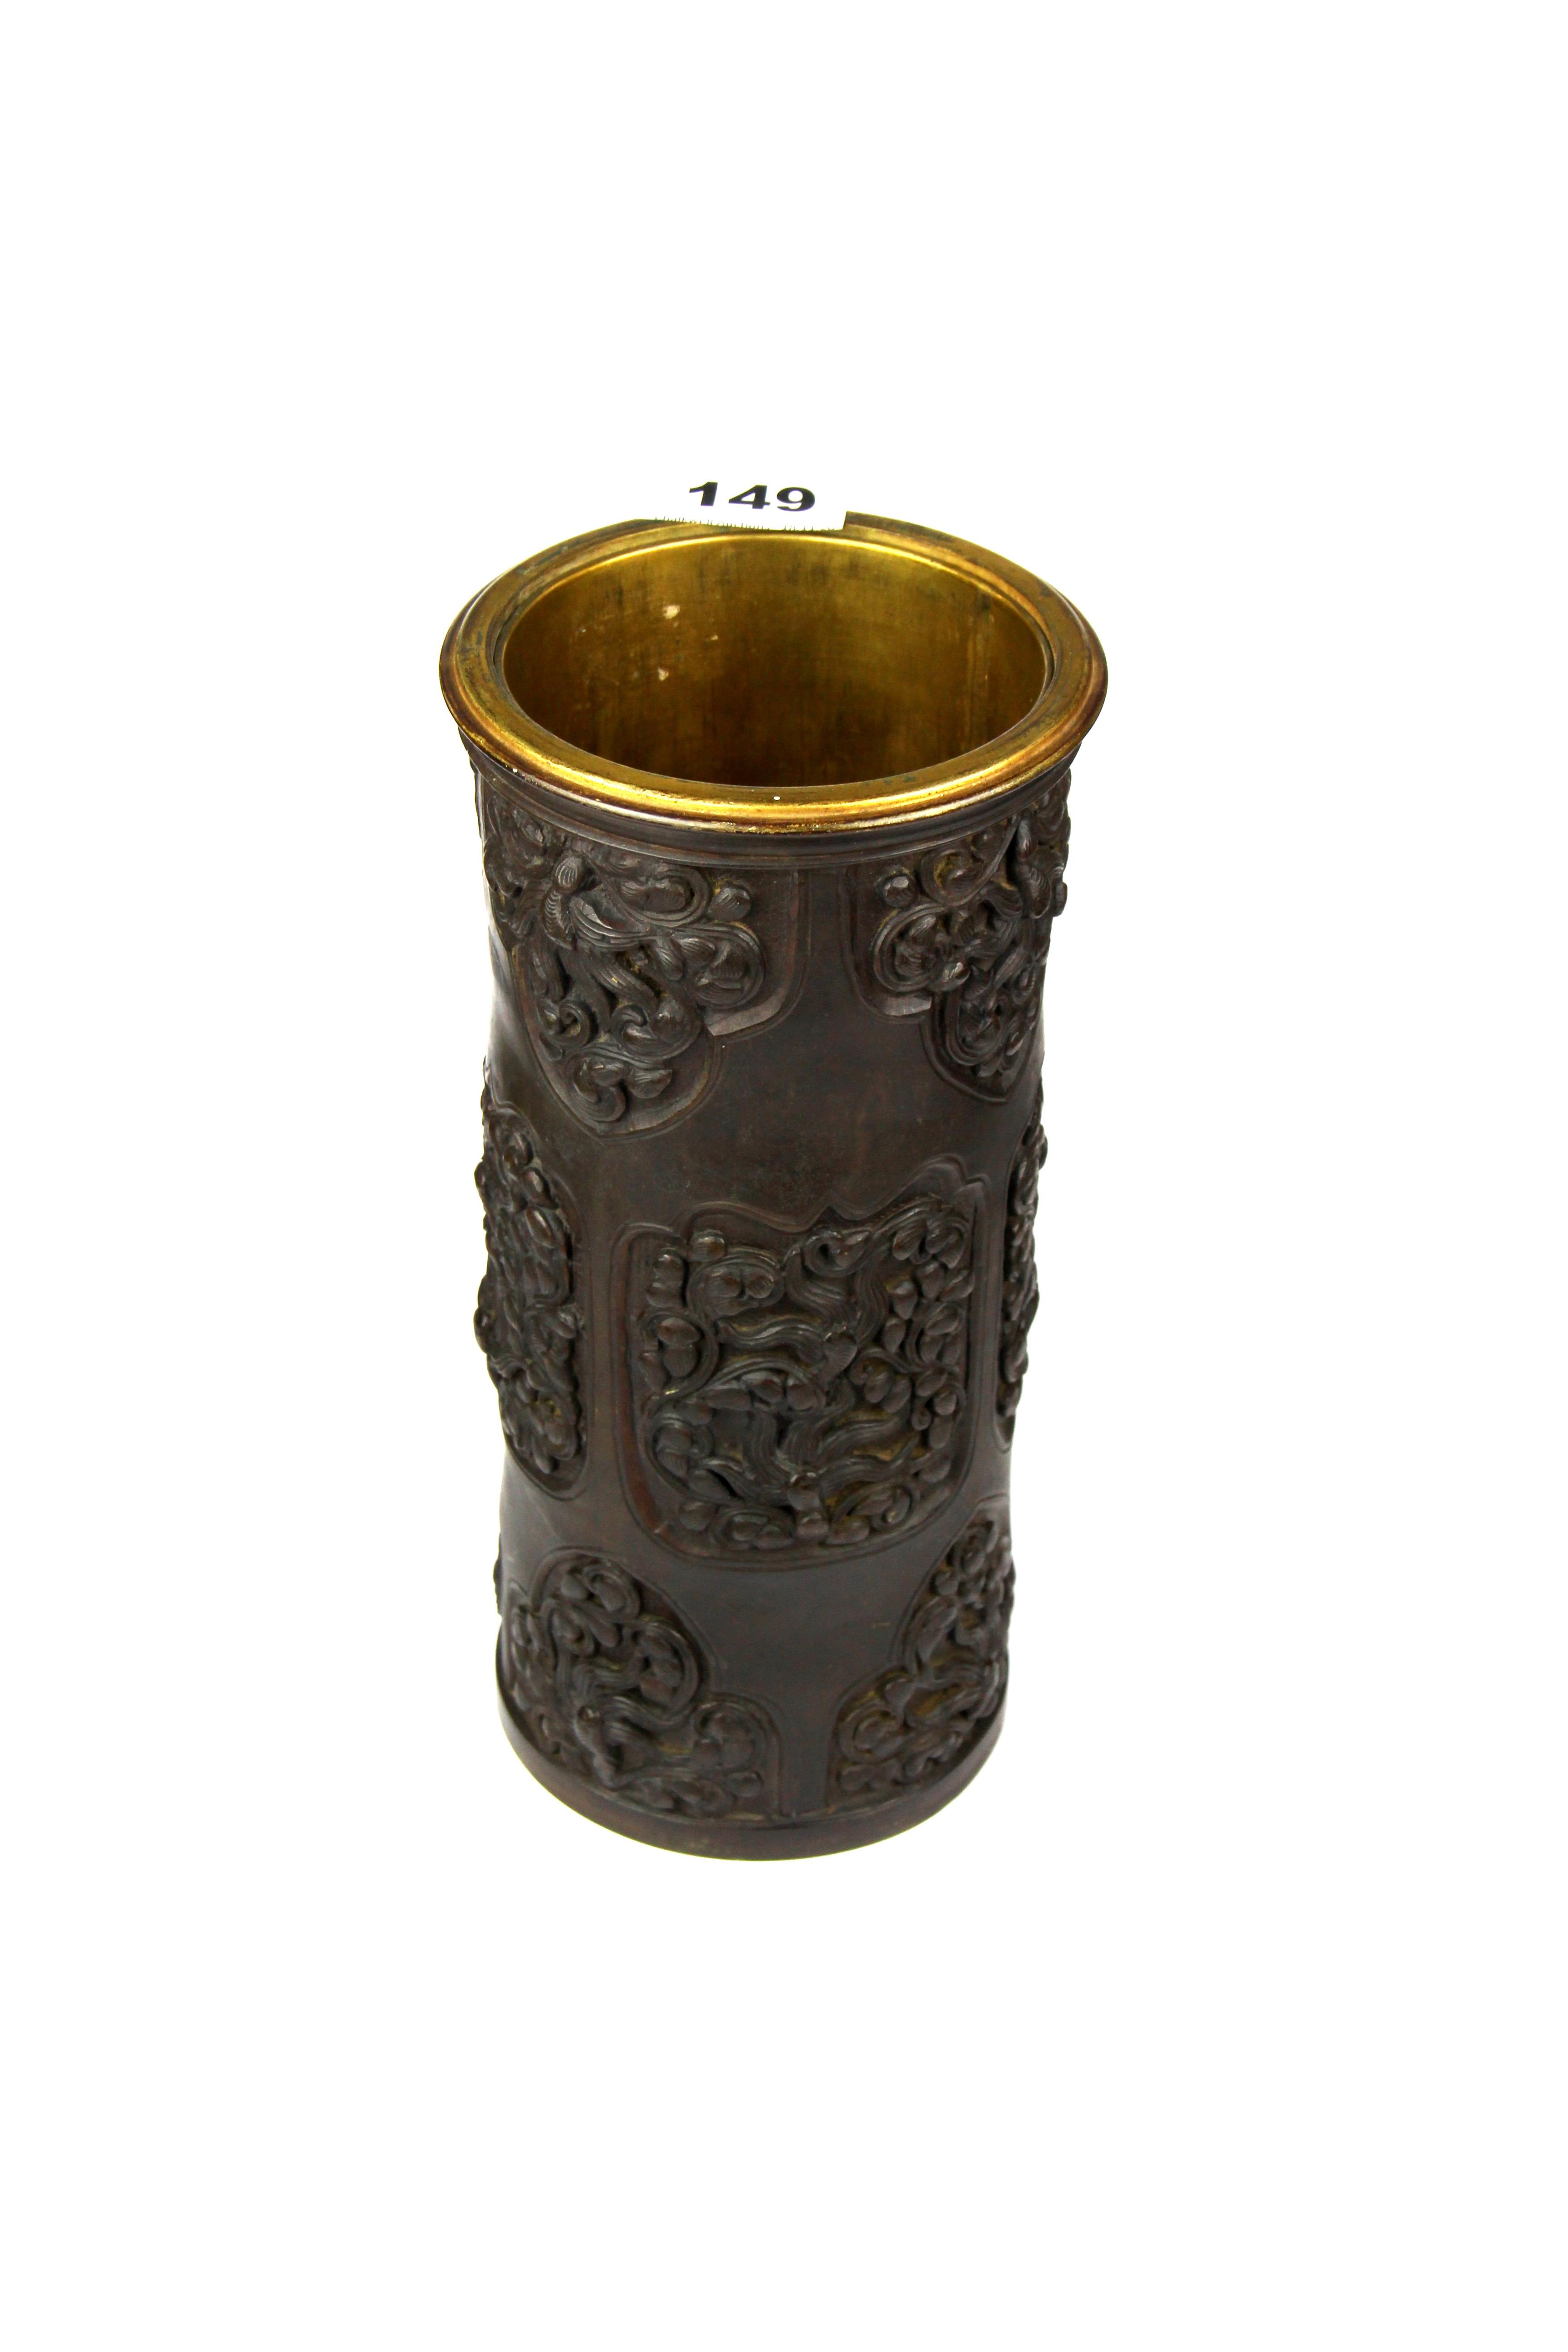 A 19th Century Japanese bronze cylinder vase/ brush pot with gilt brass insert, H. 24cm. - Image 2 of 2